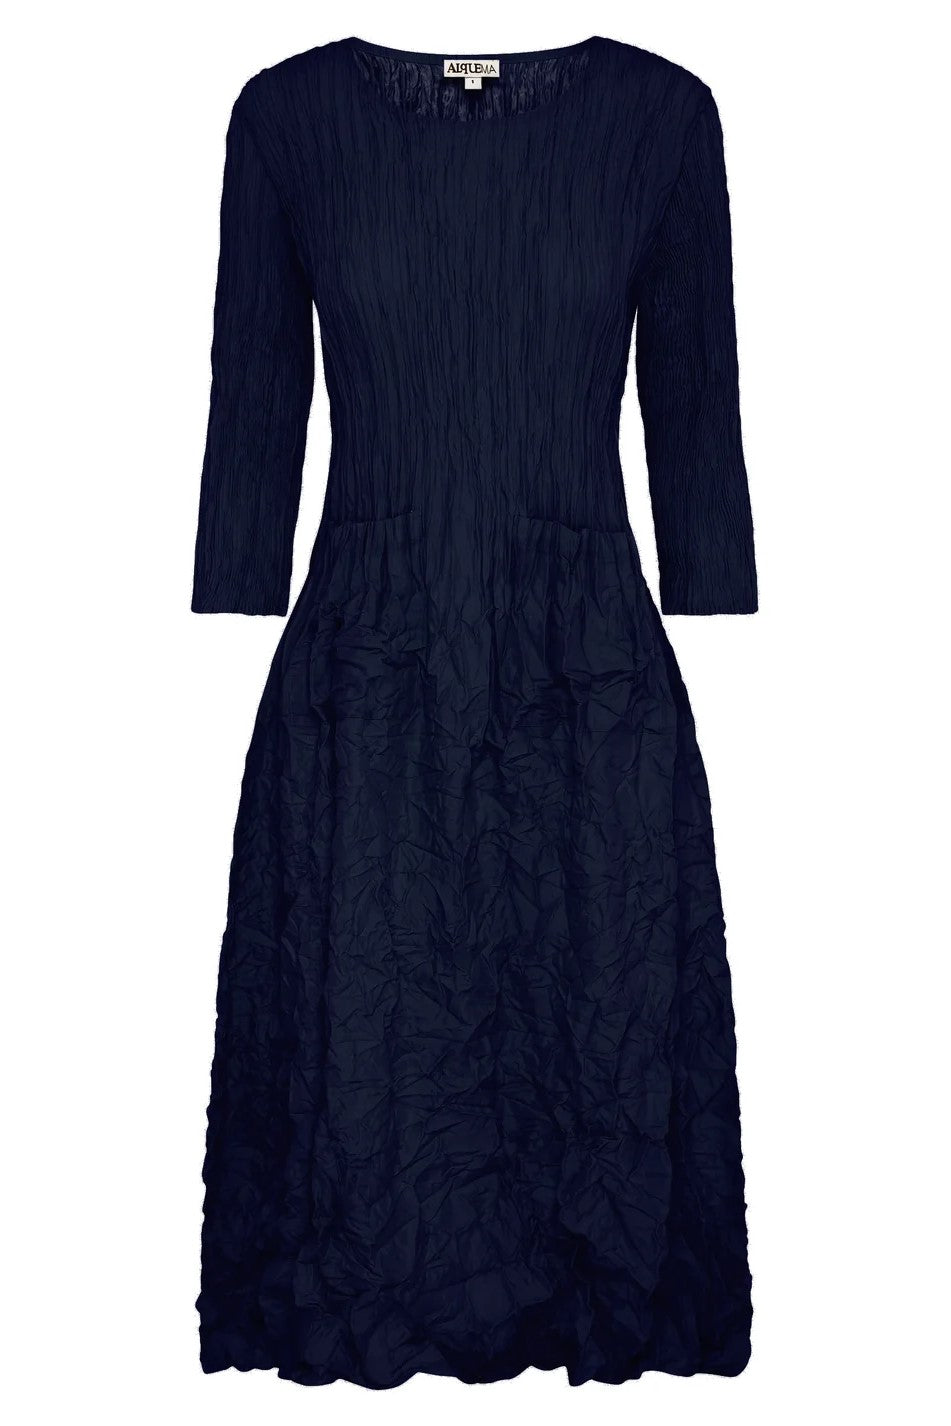 ALQUEMA - 3/4 Sleeve Smash Pocket Dress Navy - Magpie Style